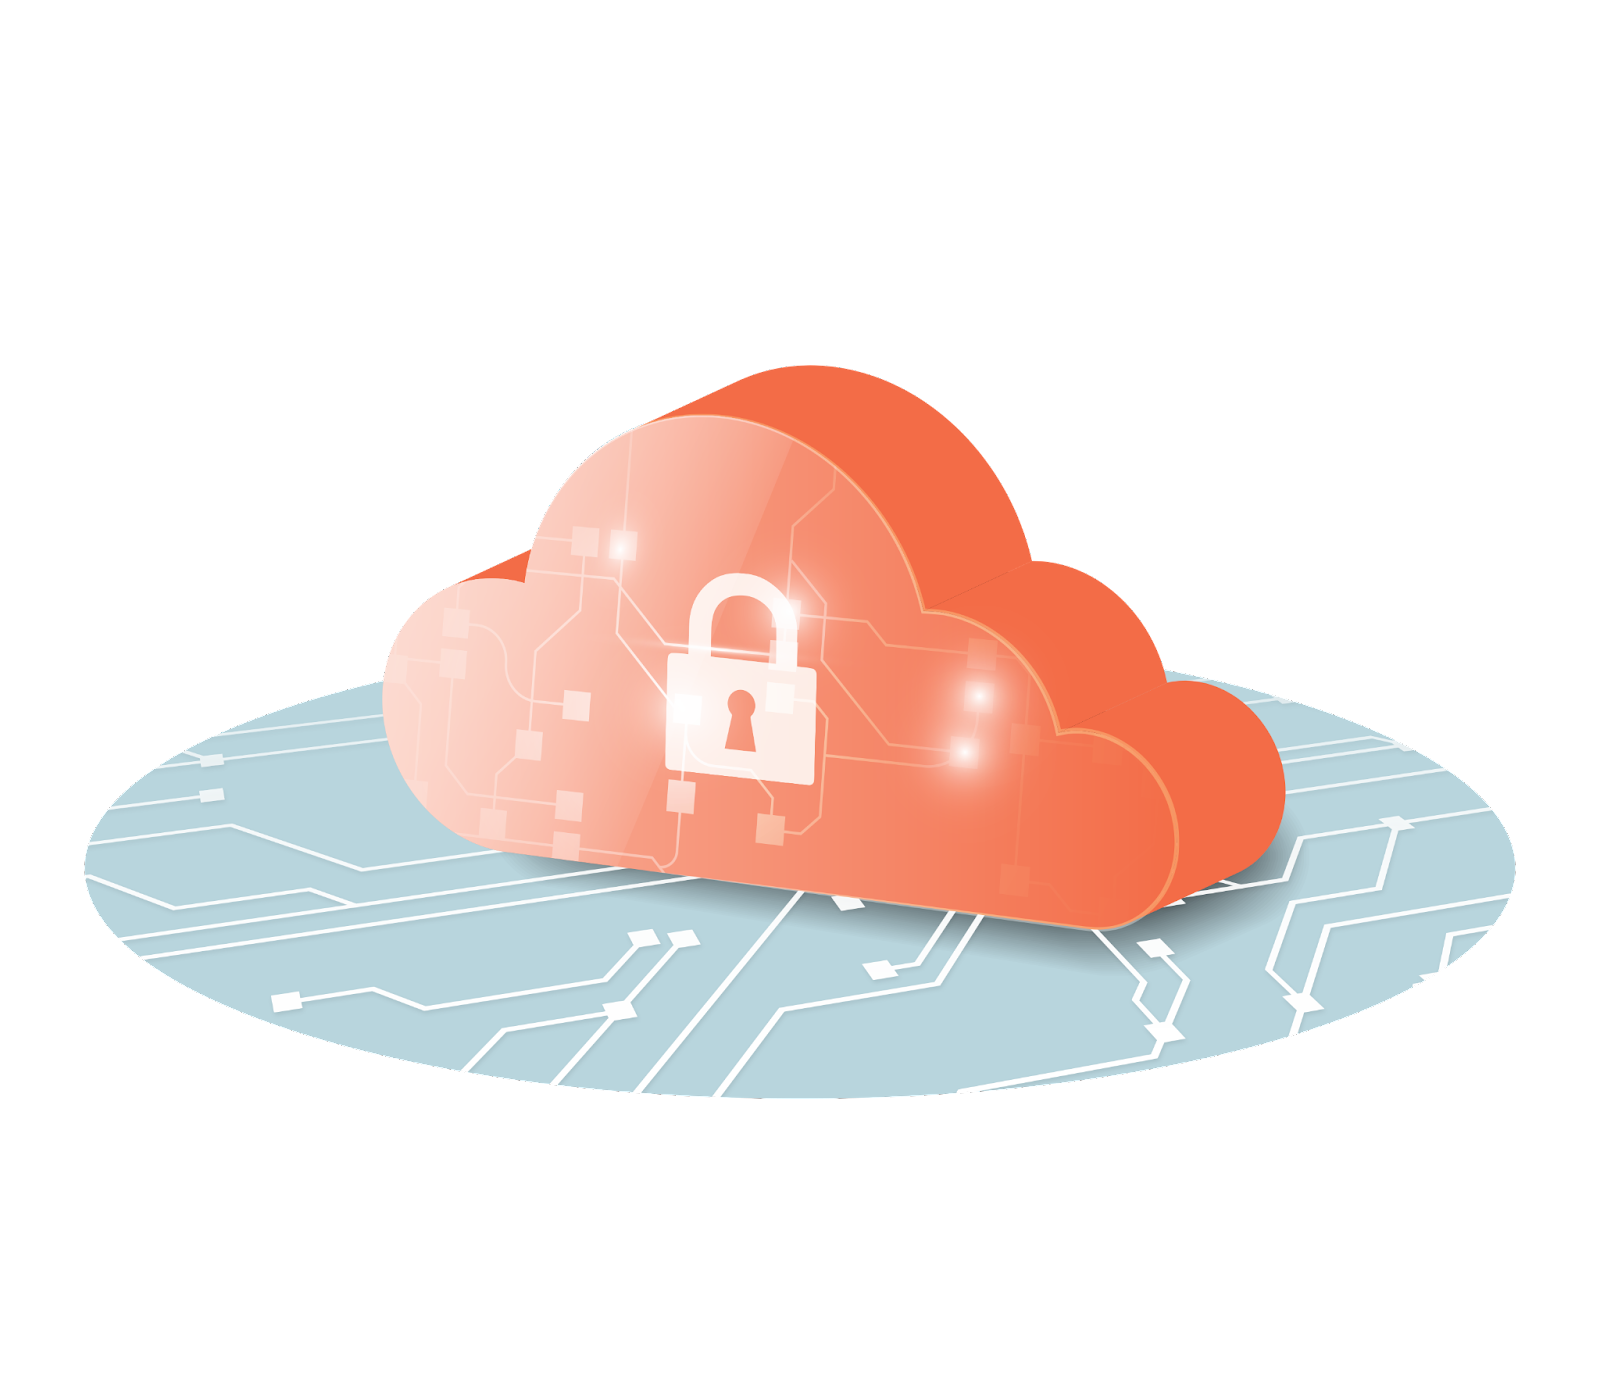 Cloud security challenges